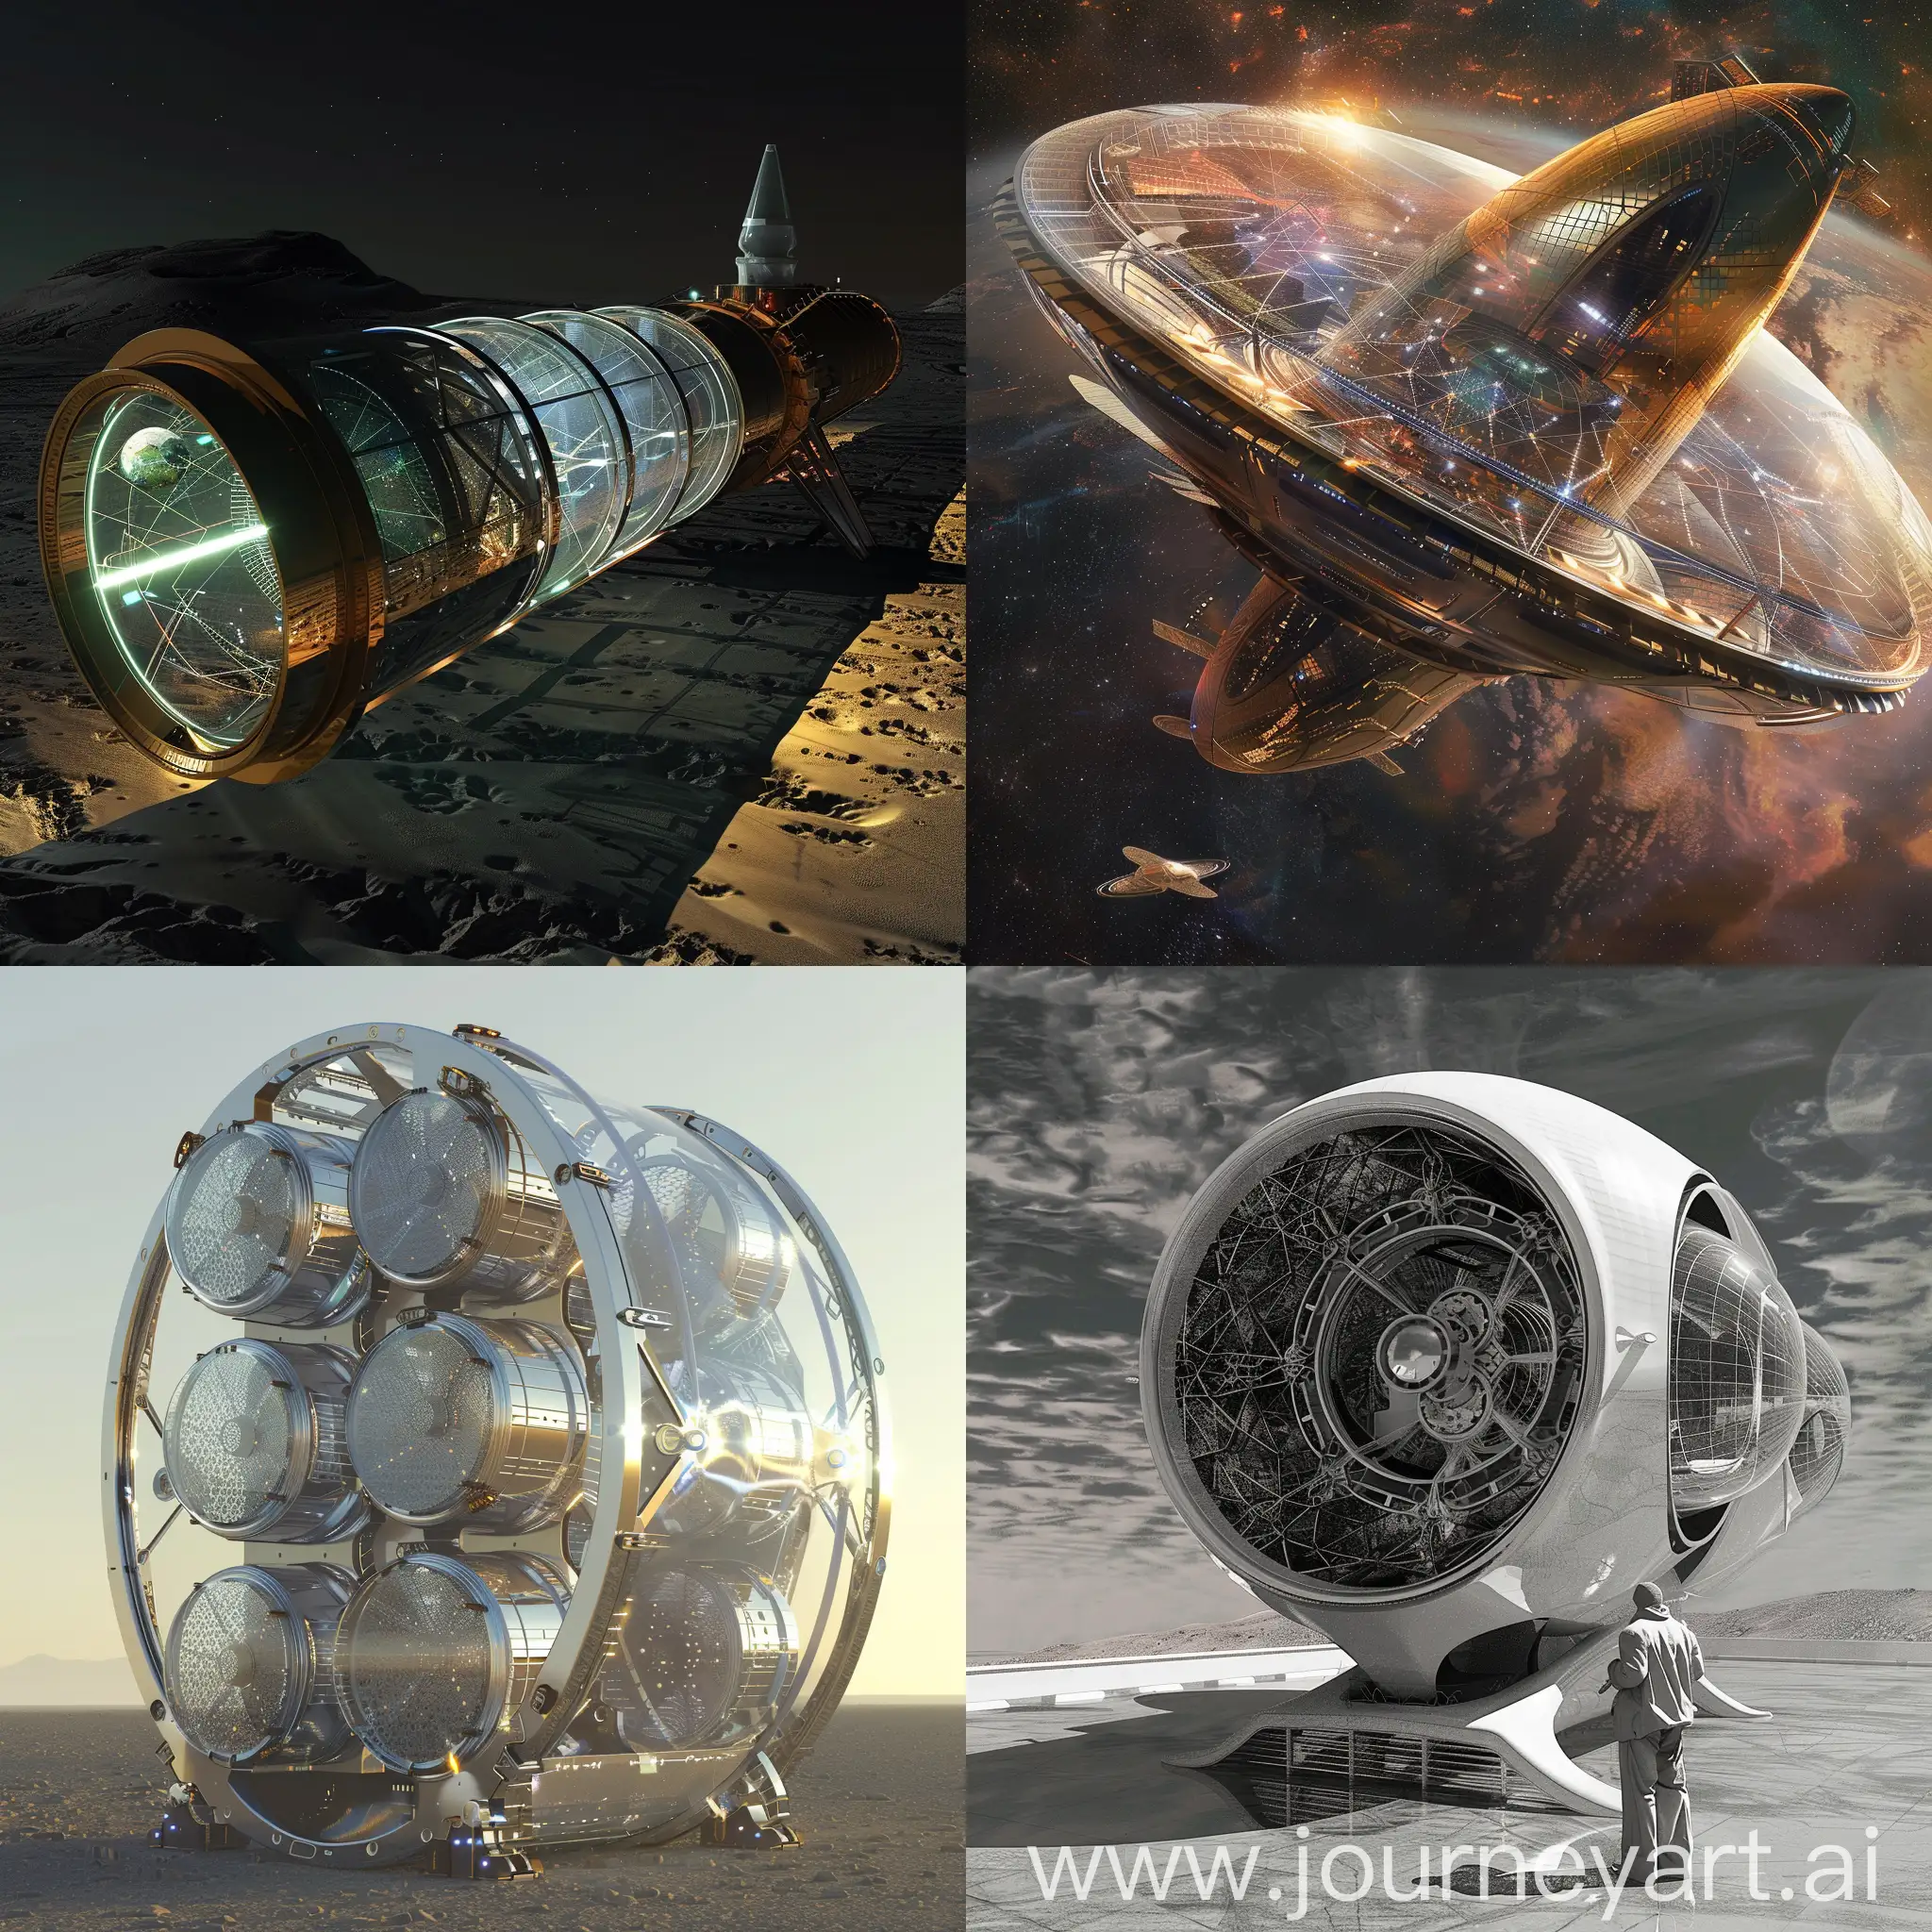 Futuristic-SciFi-Space-Telescope-with-Advanced-Technology-and-Modular-Design